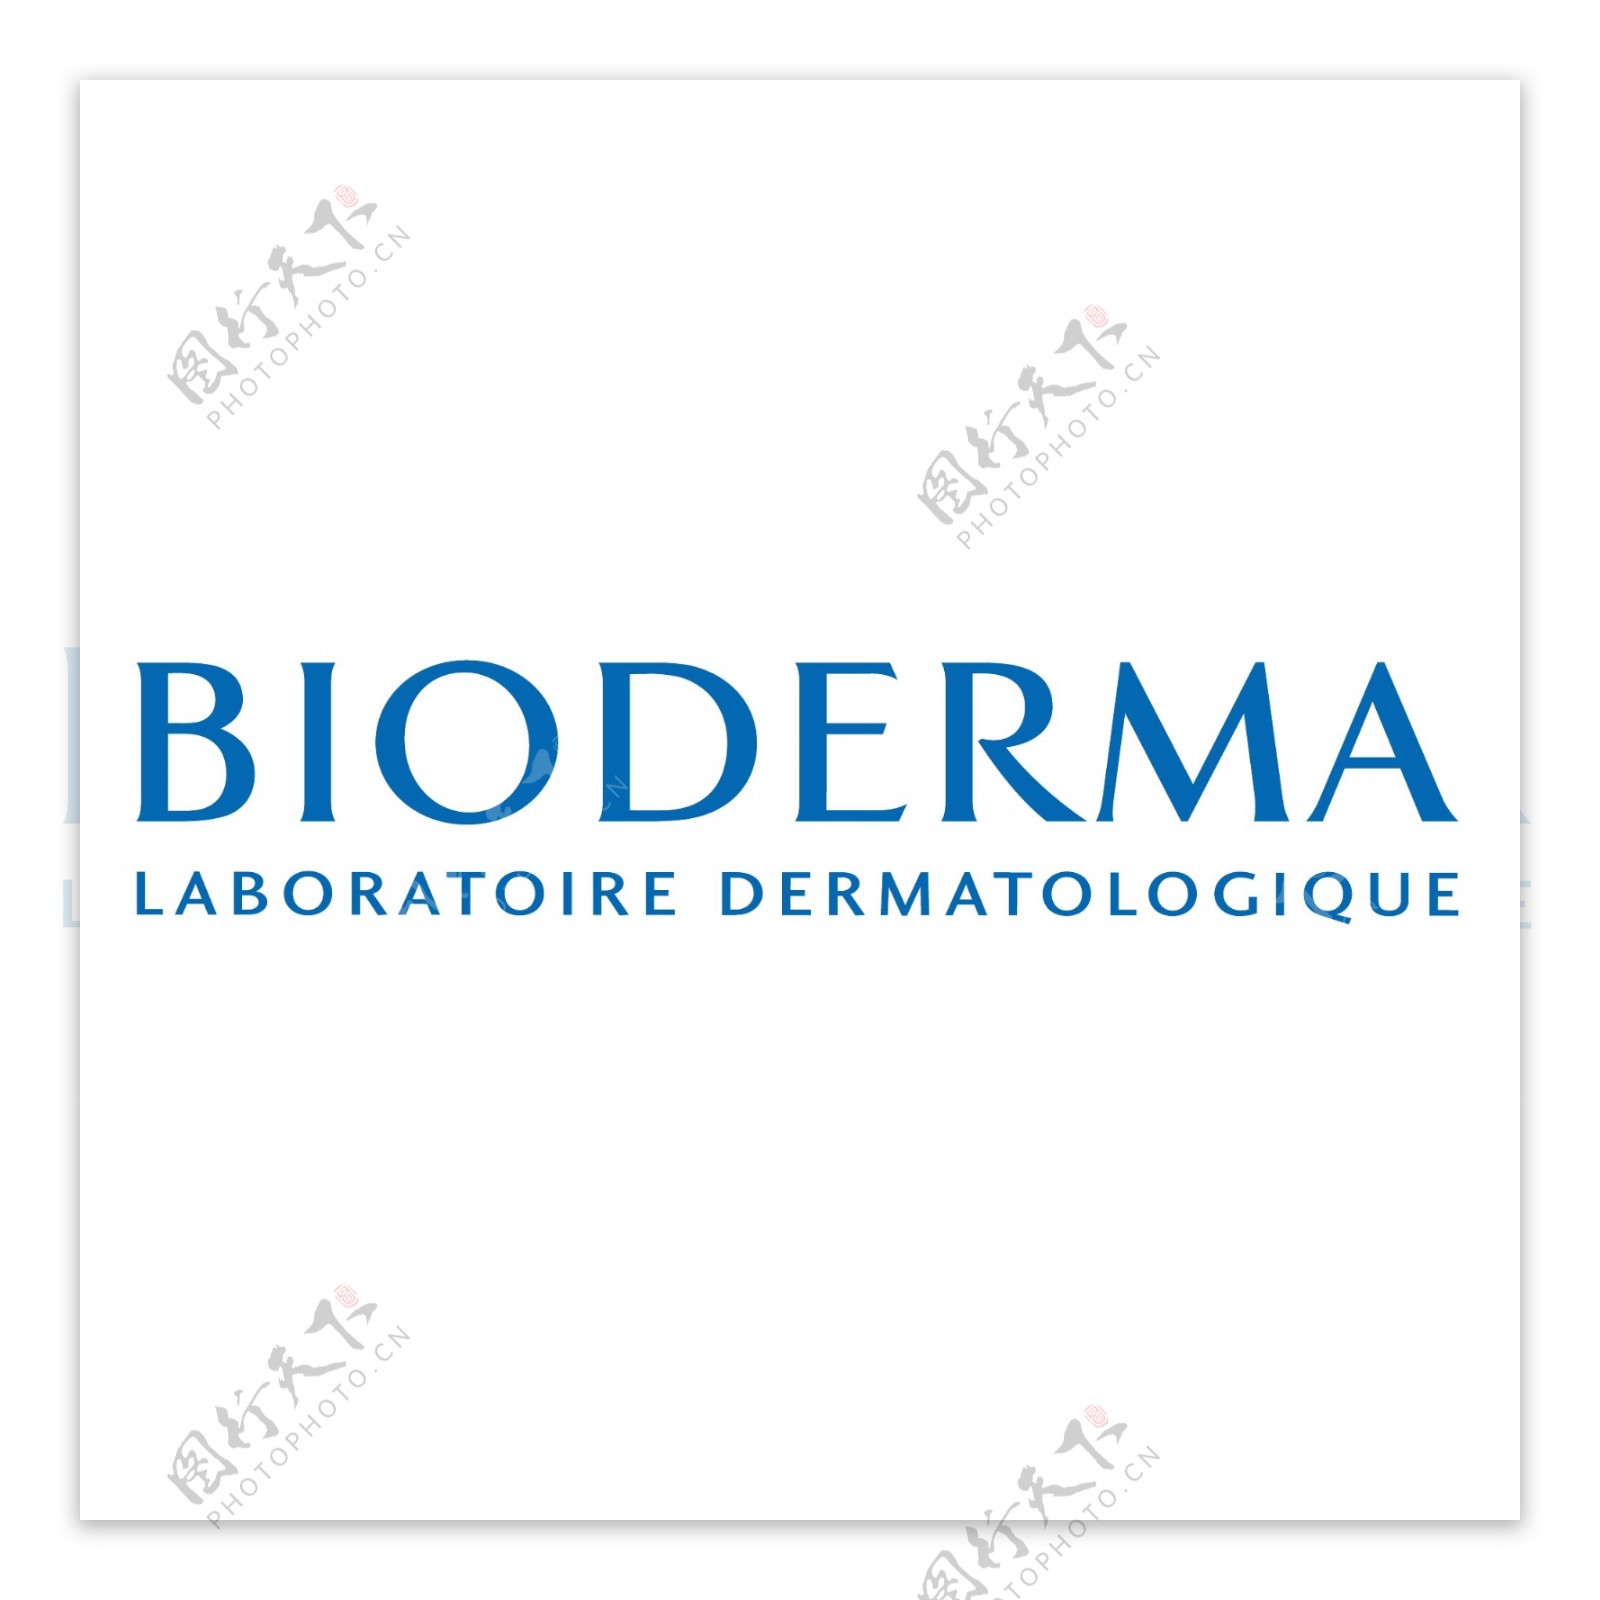 Biodermalogo设计欣赏Bioderma医院LOGO下载标志设计欣赏